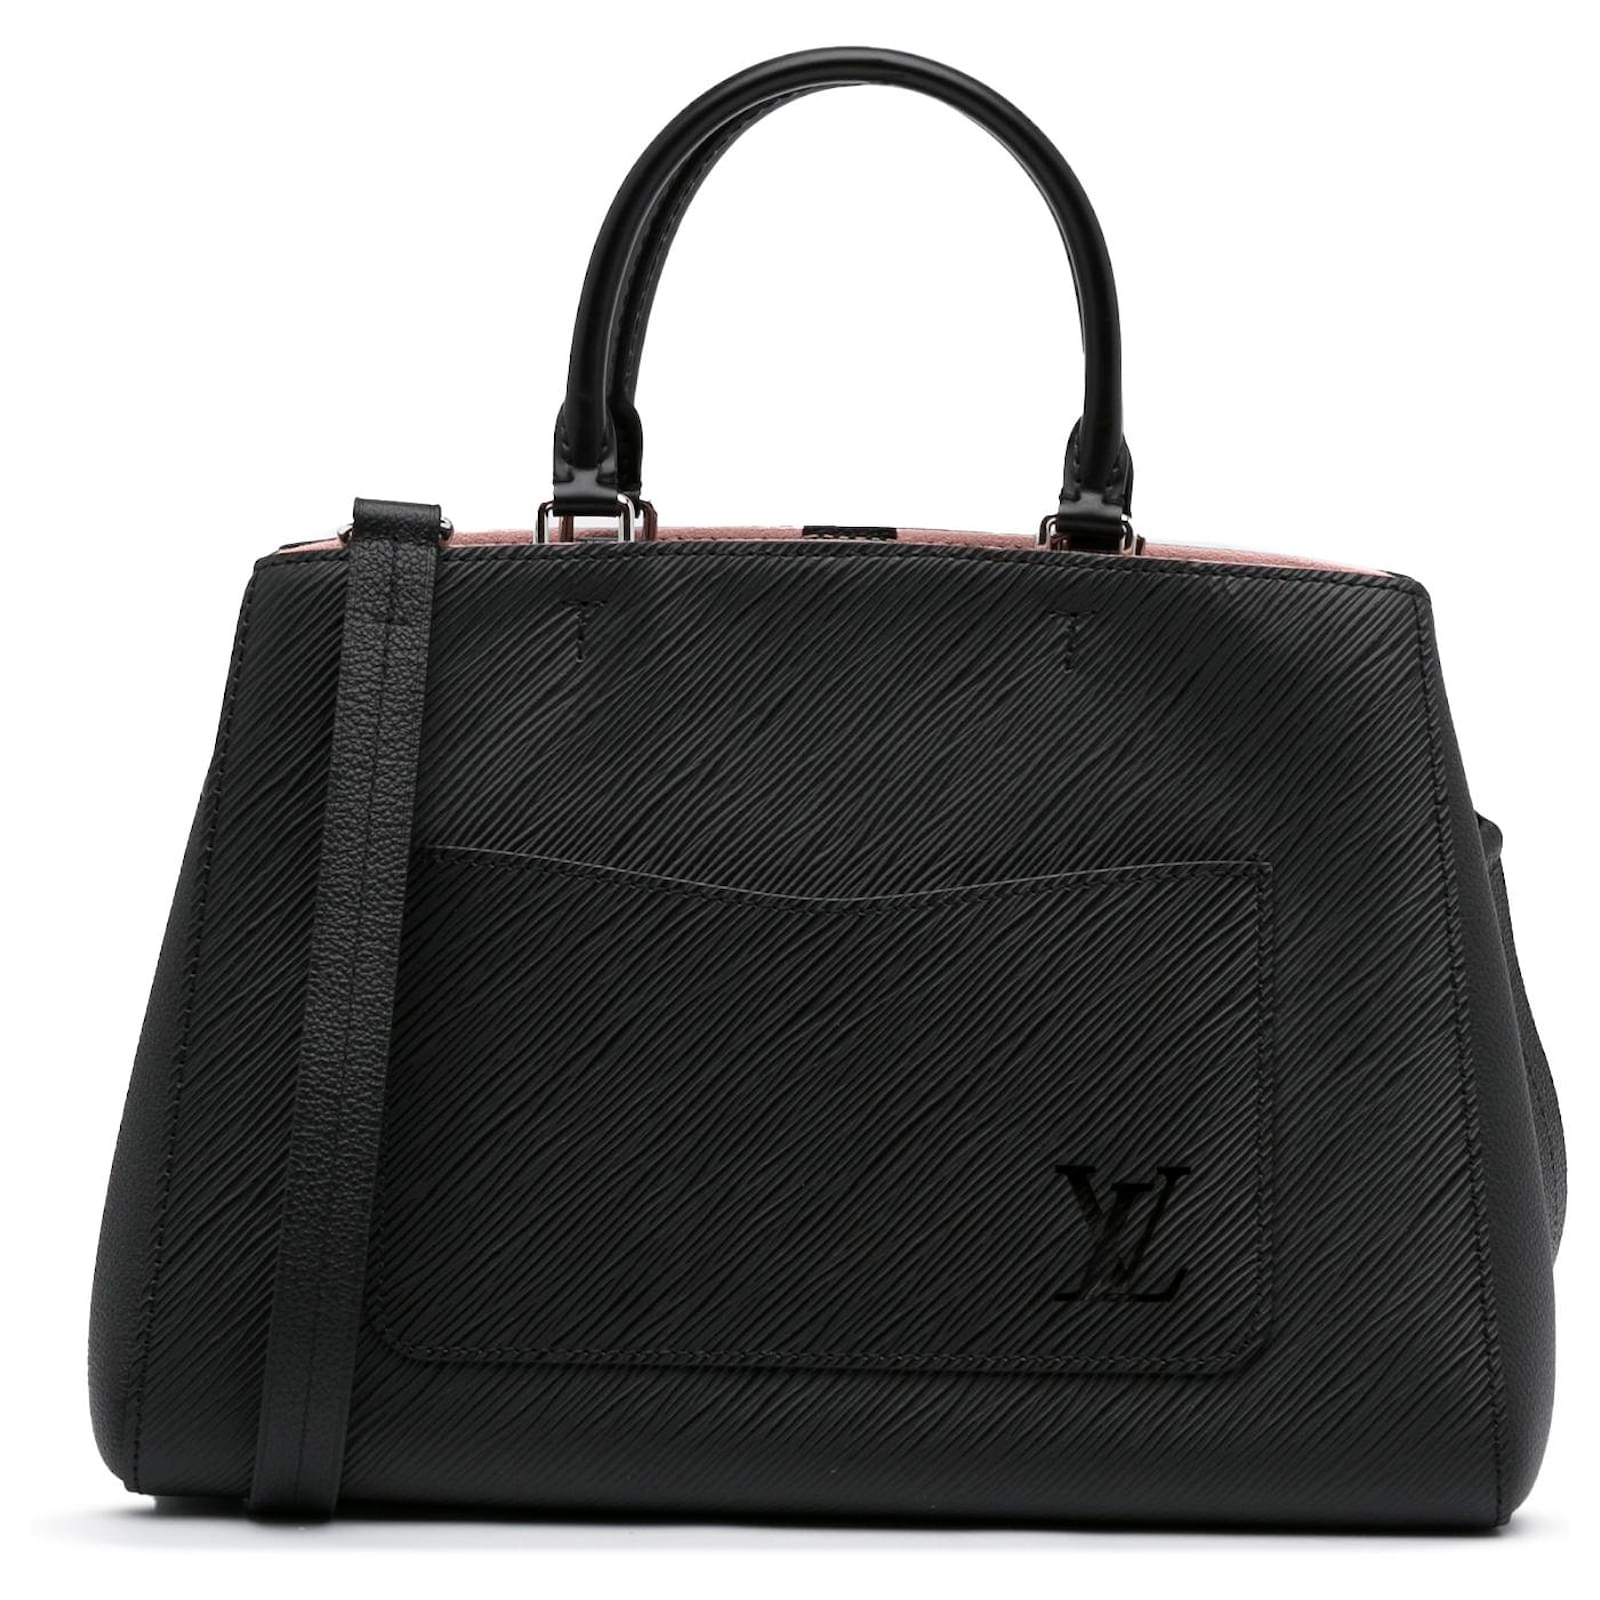 Marelle Epi Leather - Women - Handbags